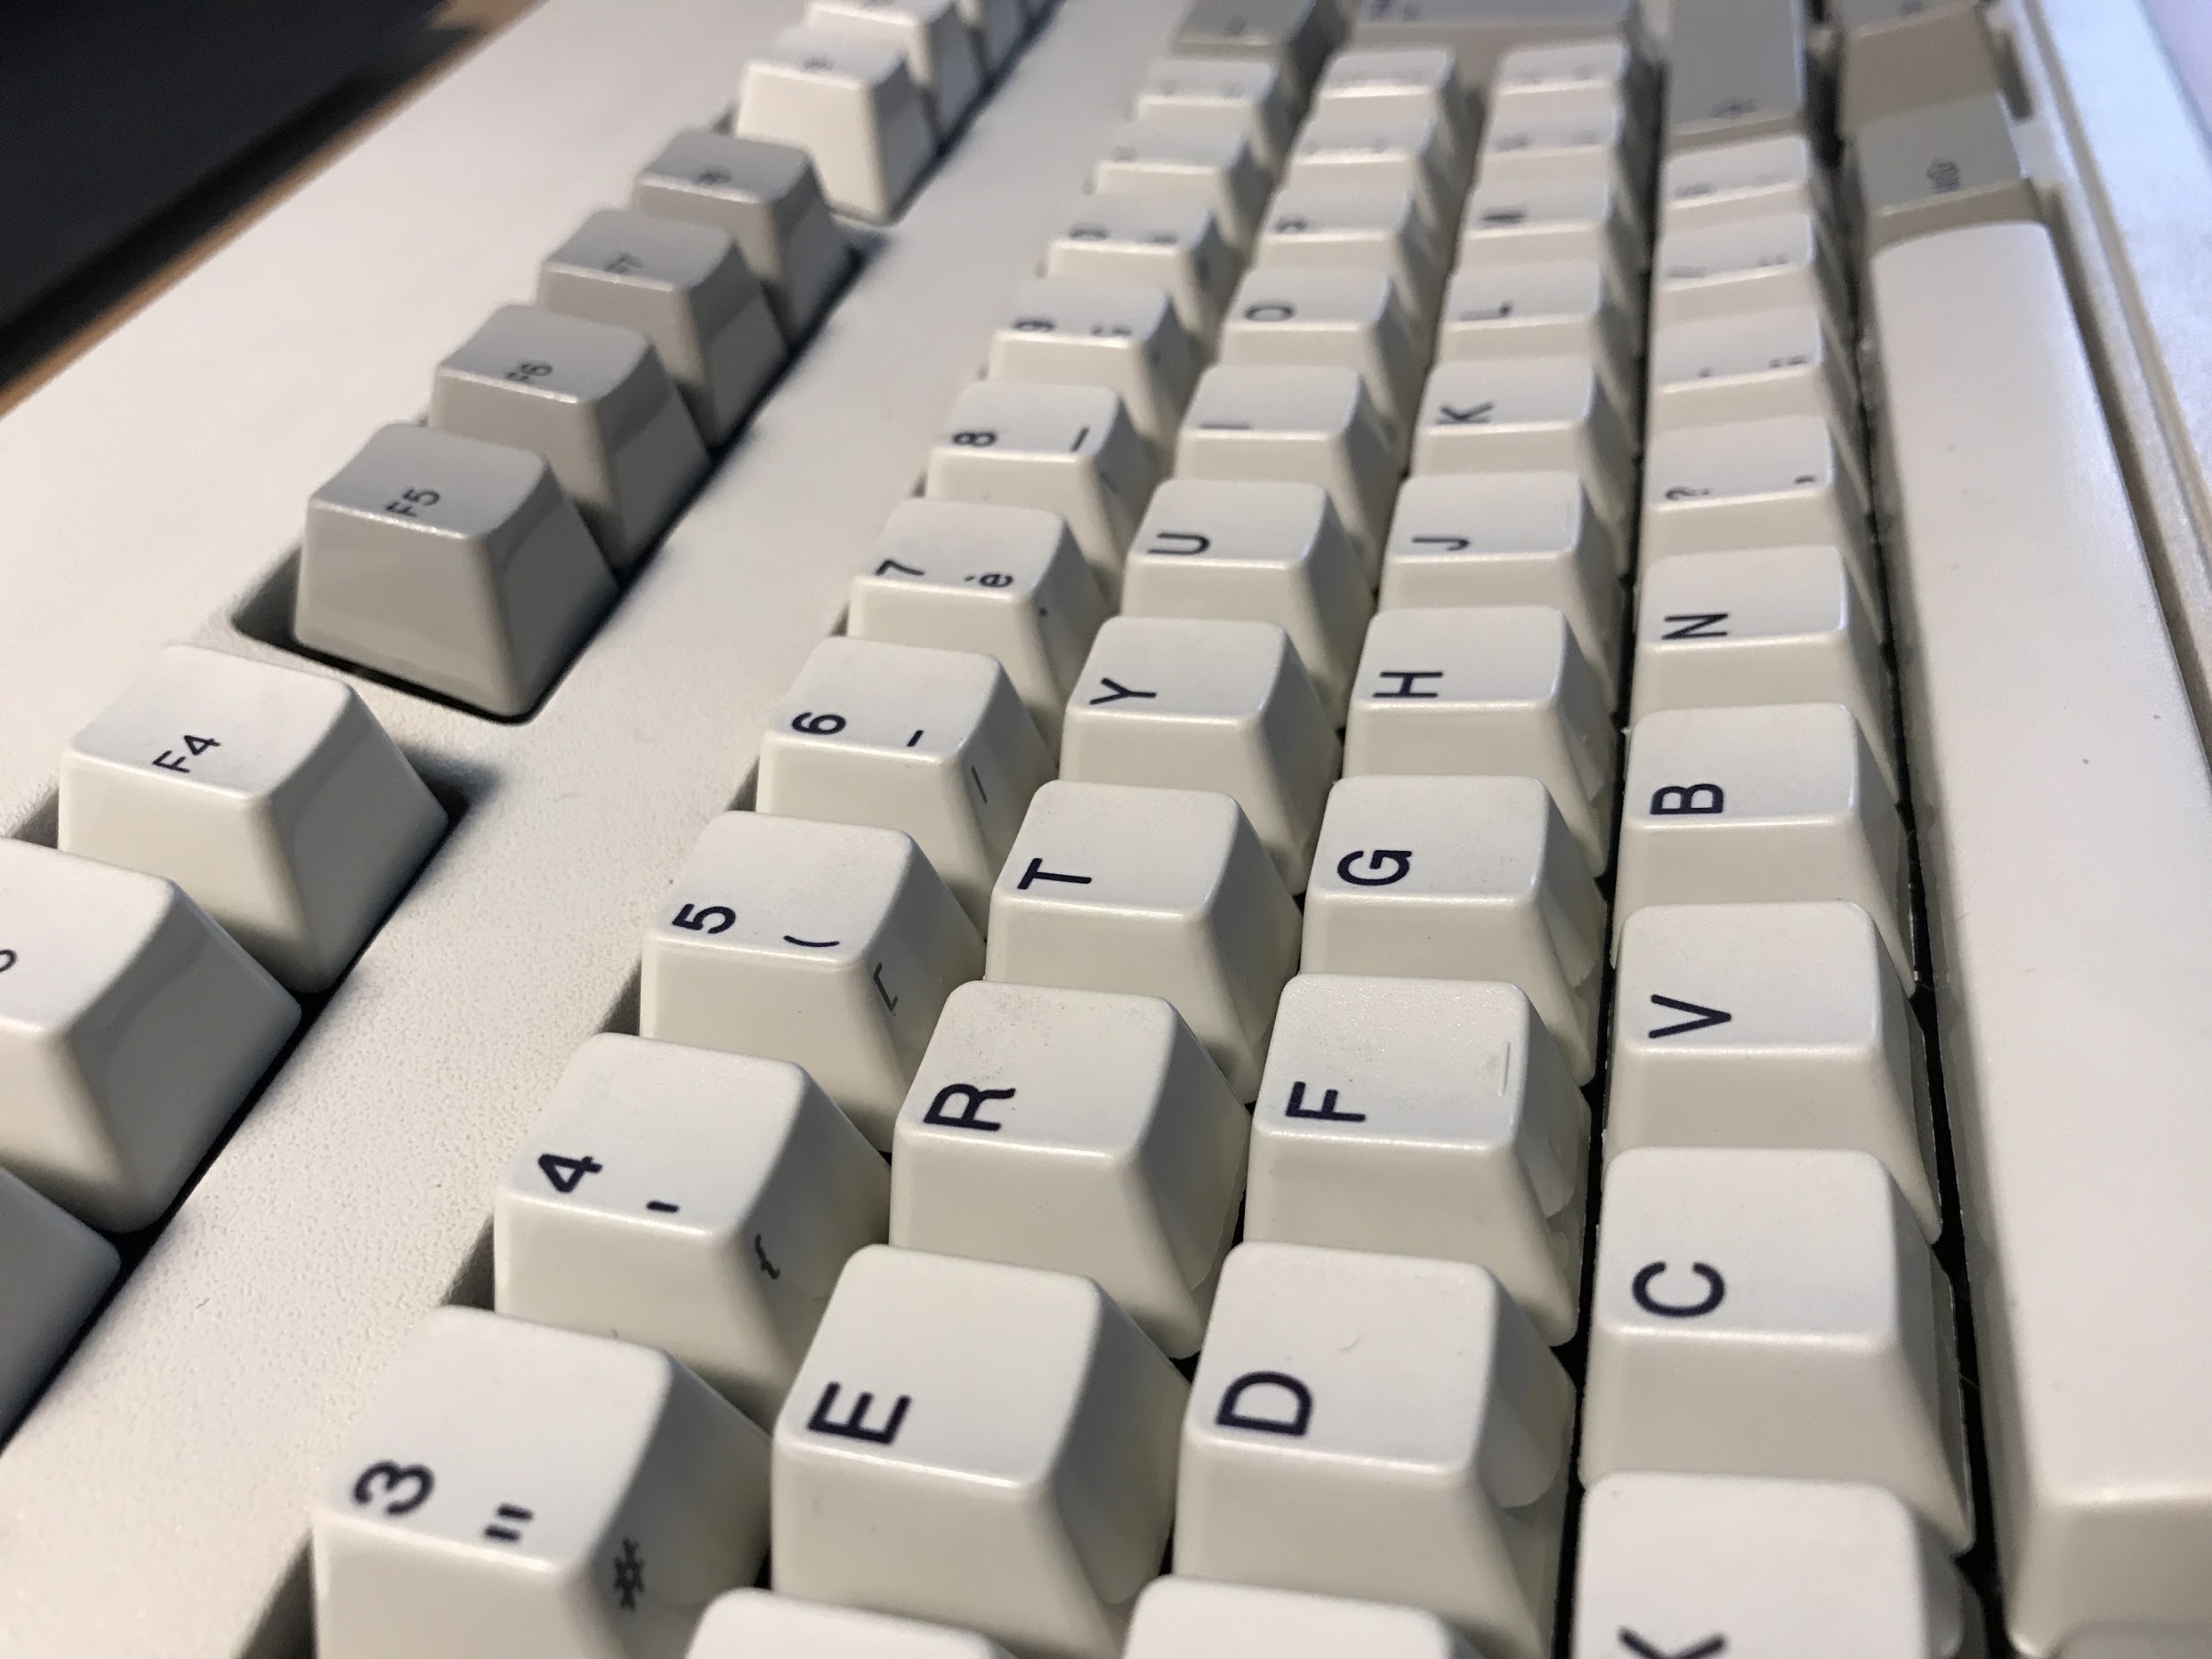 Tutoriel FR] - Comment bien nettoyer son clavier ? HardwareFR